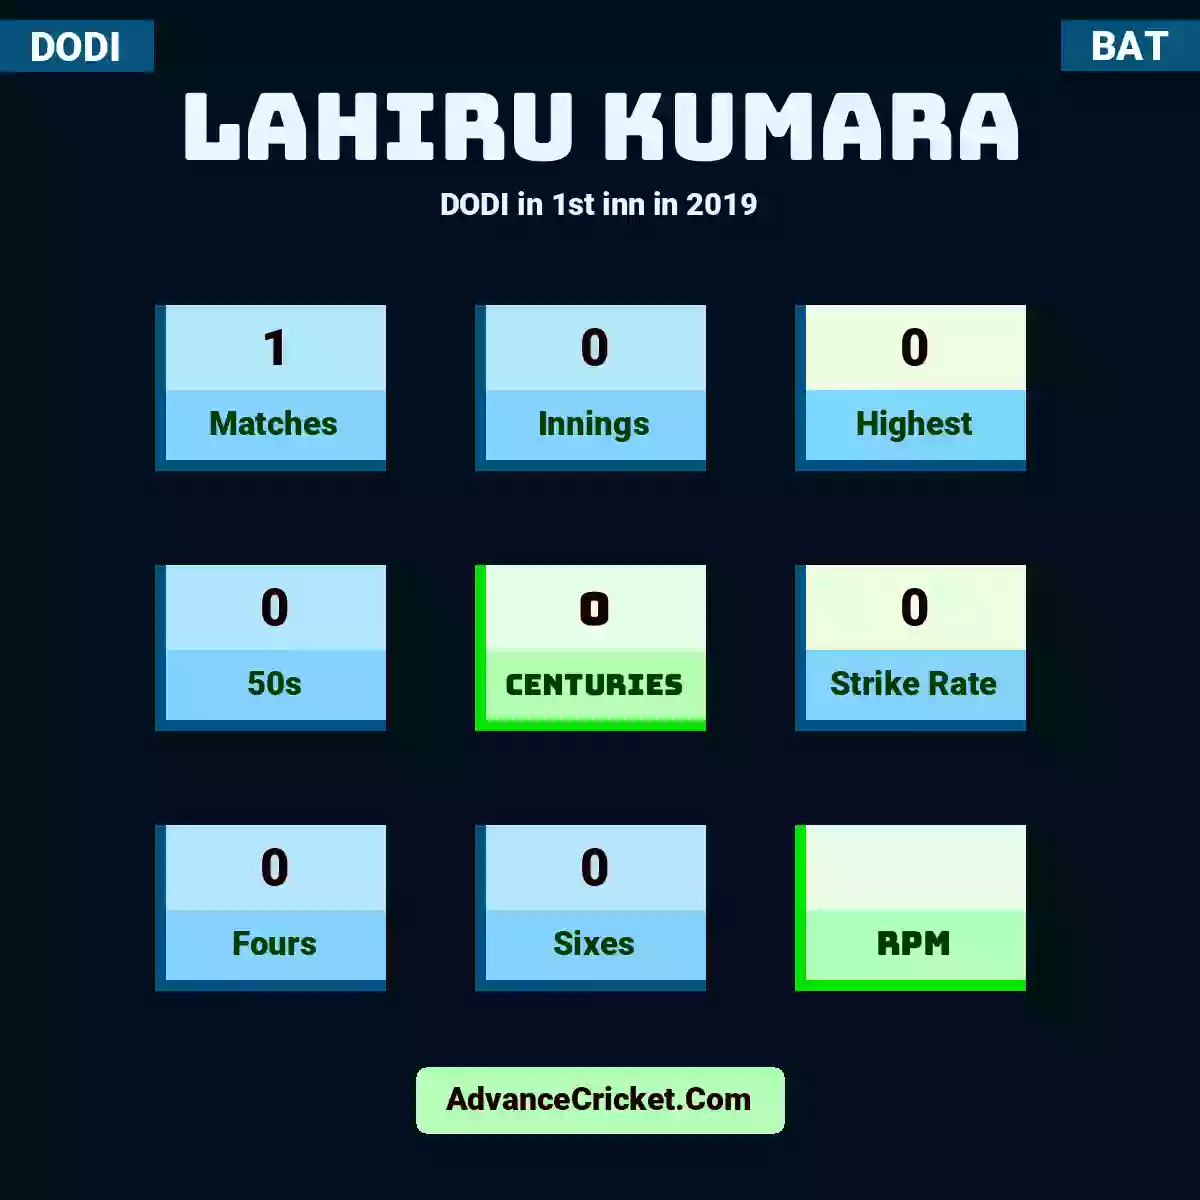 Lahiru Kumara DODI  in 1st inn in 2019, Lahiru Kumara played 1 matches, scored 0 runs as highest, 0 half-centuries, and 0 centuries, with a strike rate of 0. L.Kumara hit 0 fours and 0 sixes.